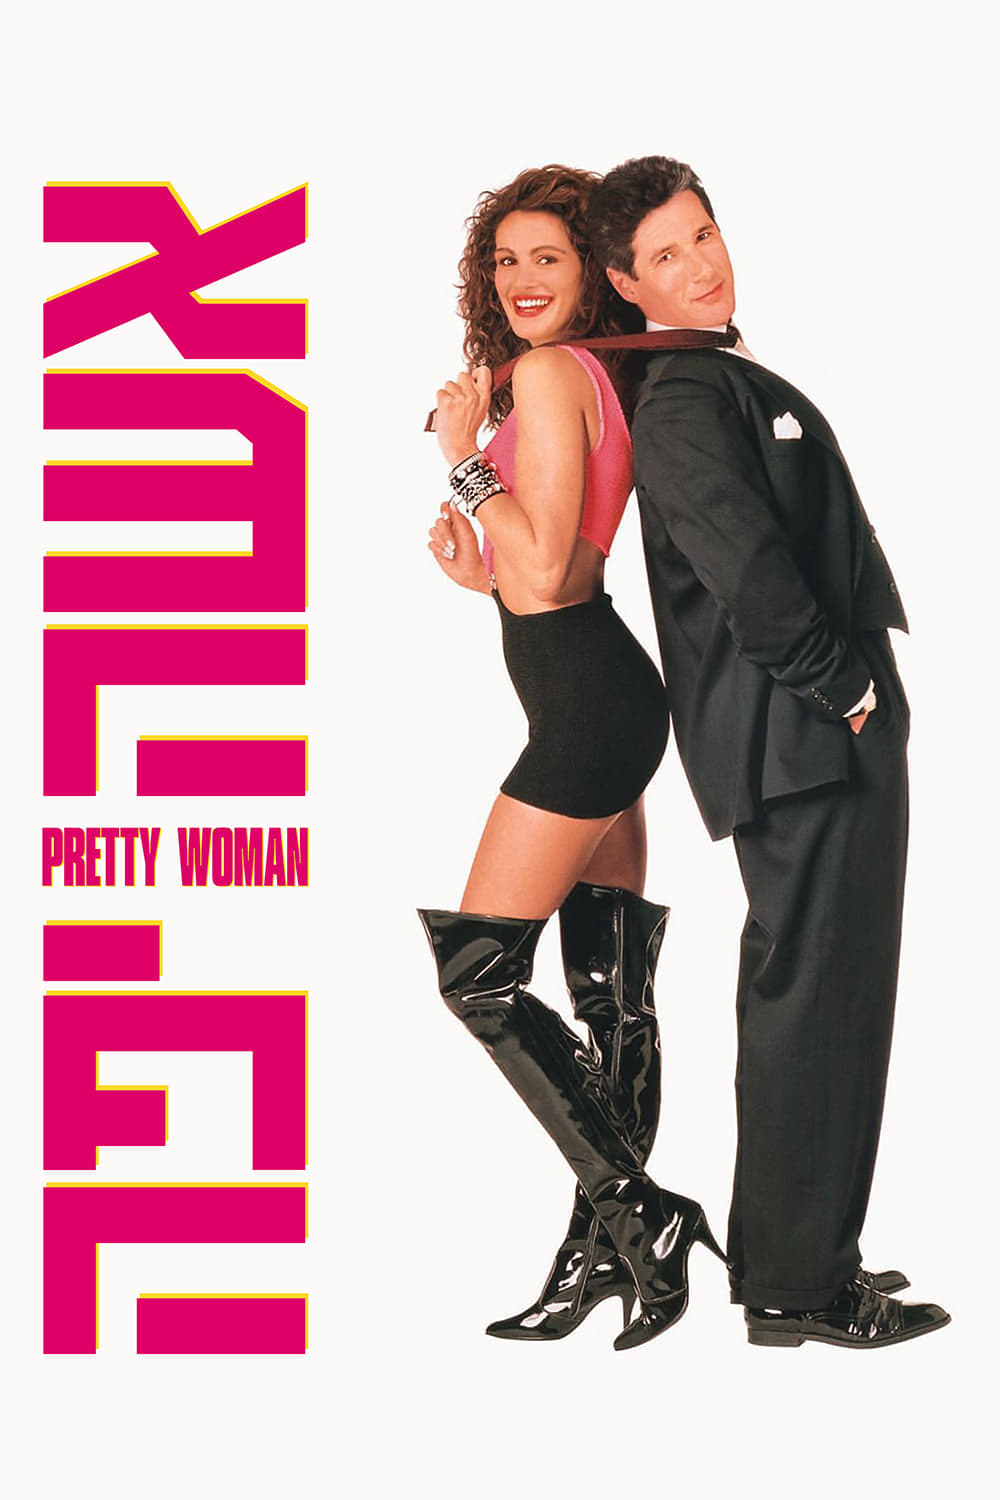 Watch Pretty Woman 1990 Full Movie Online Free Cinefox